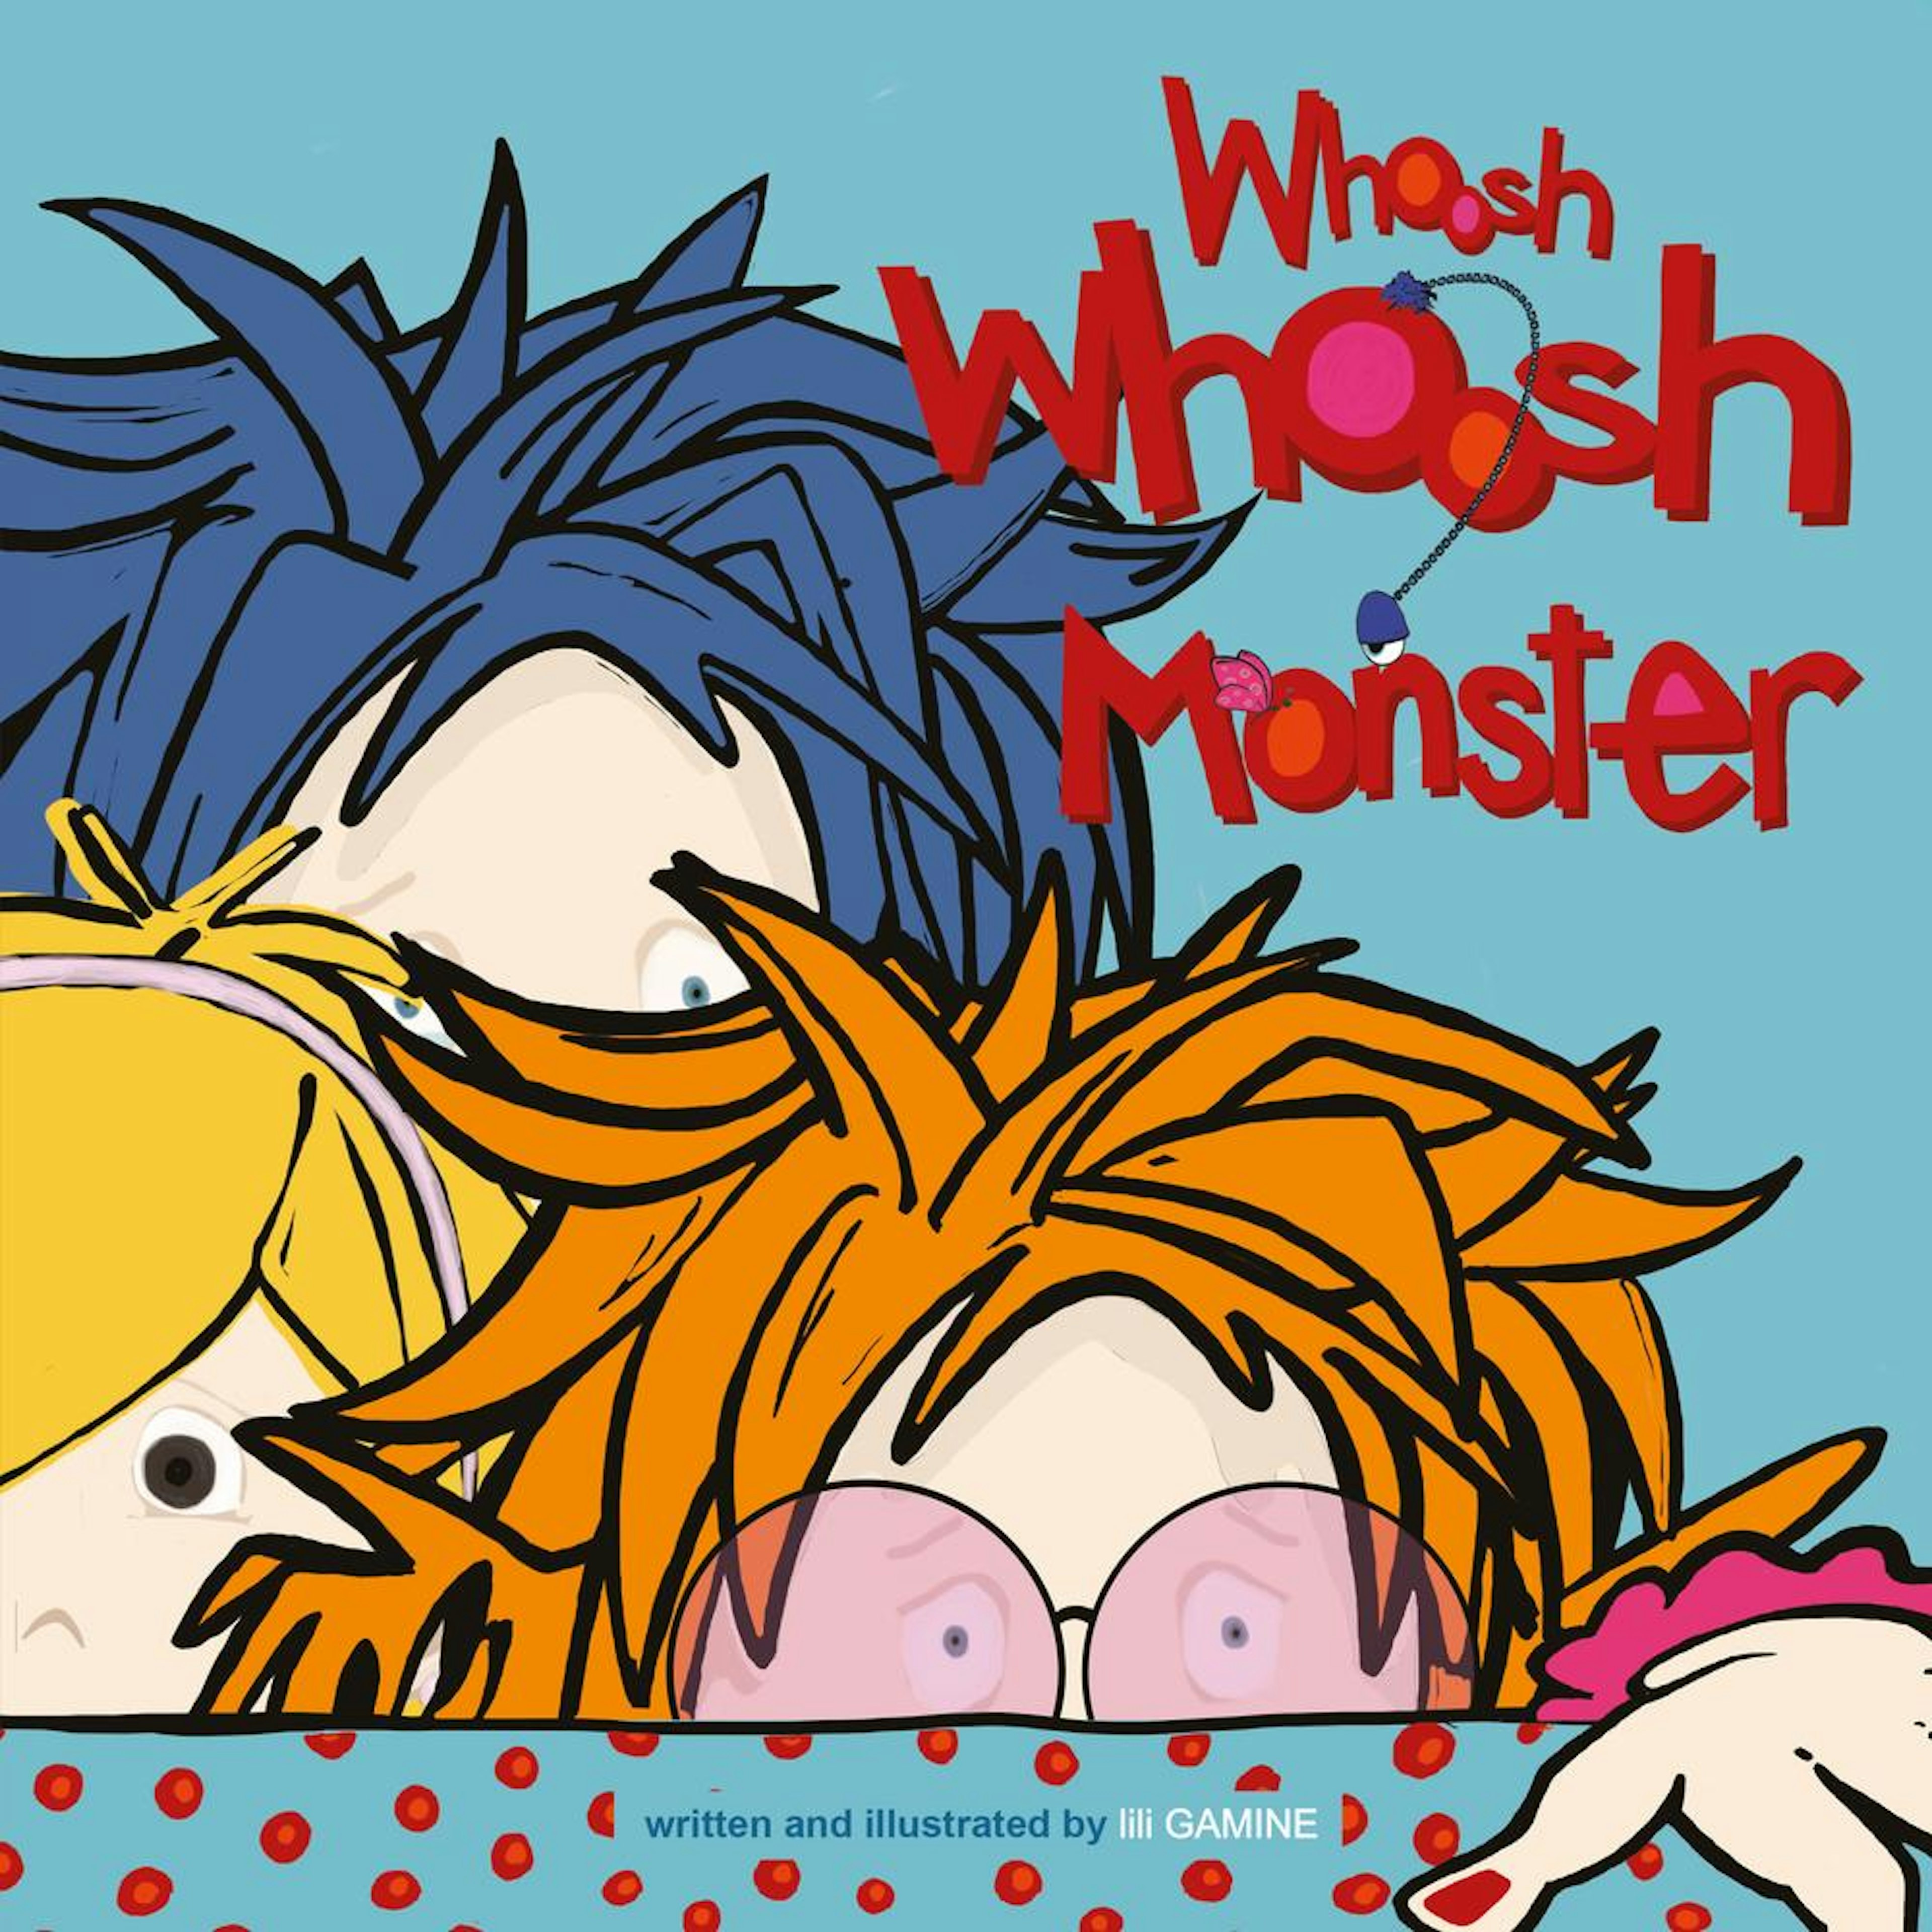 Whoosh Whoosh Monster